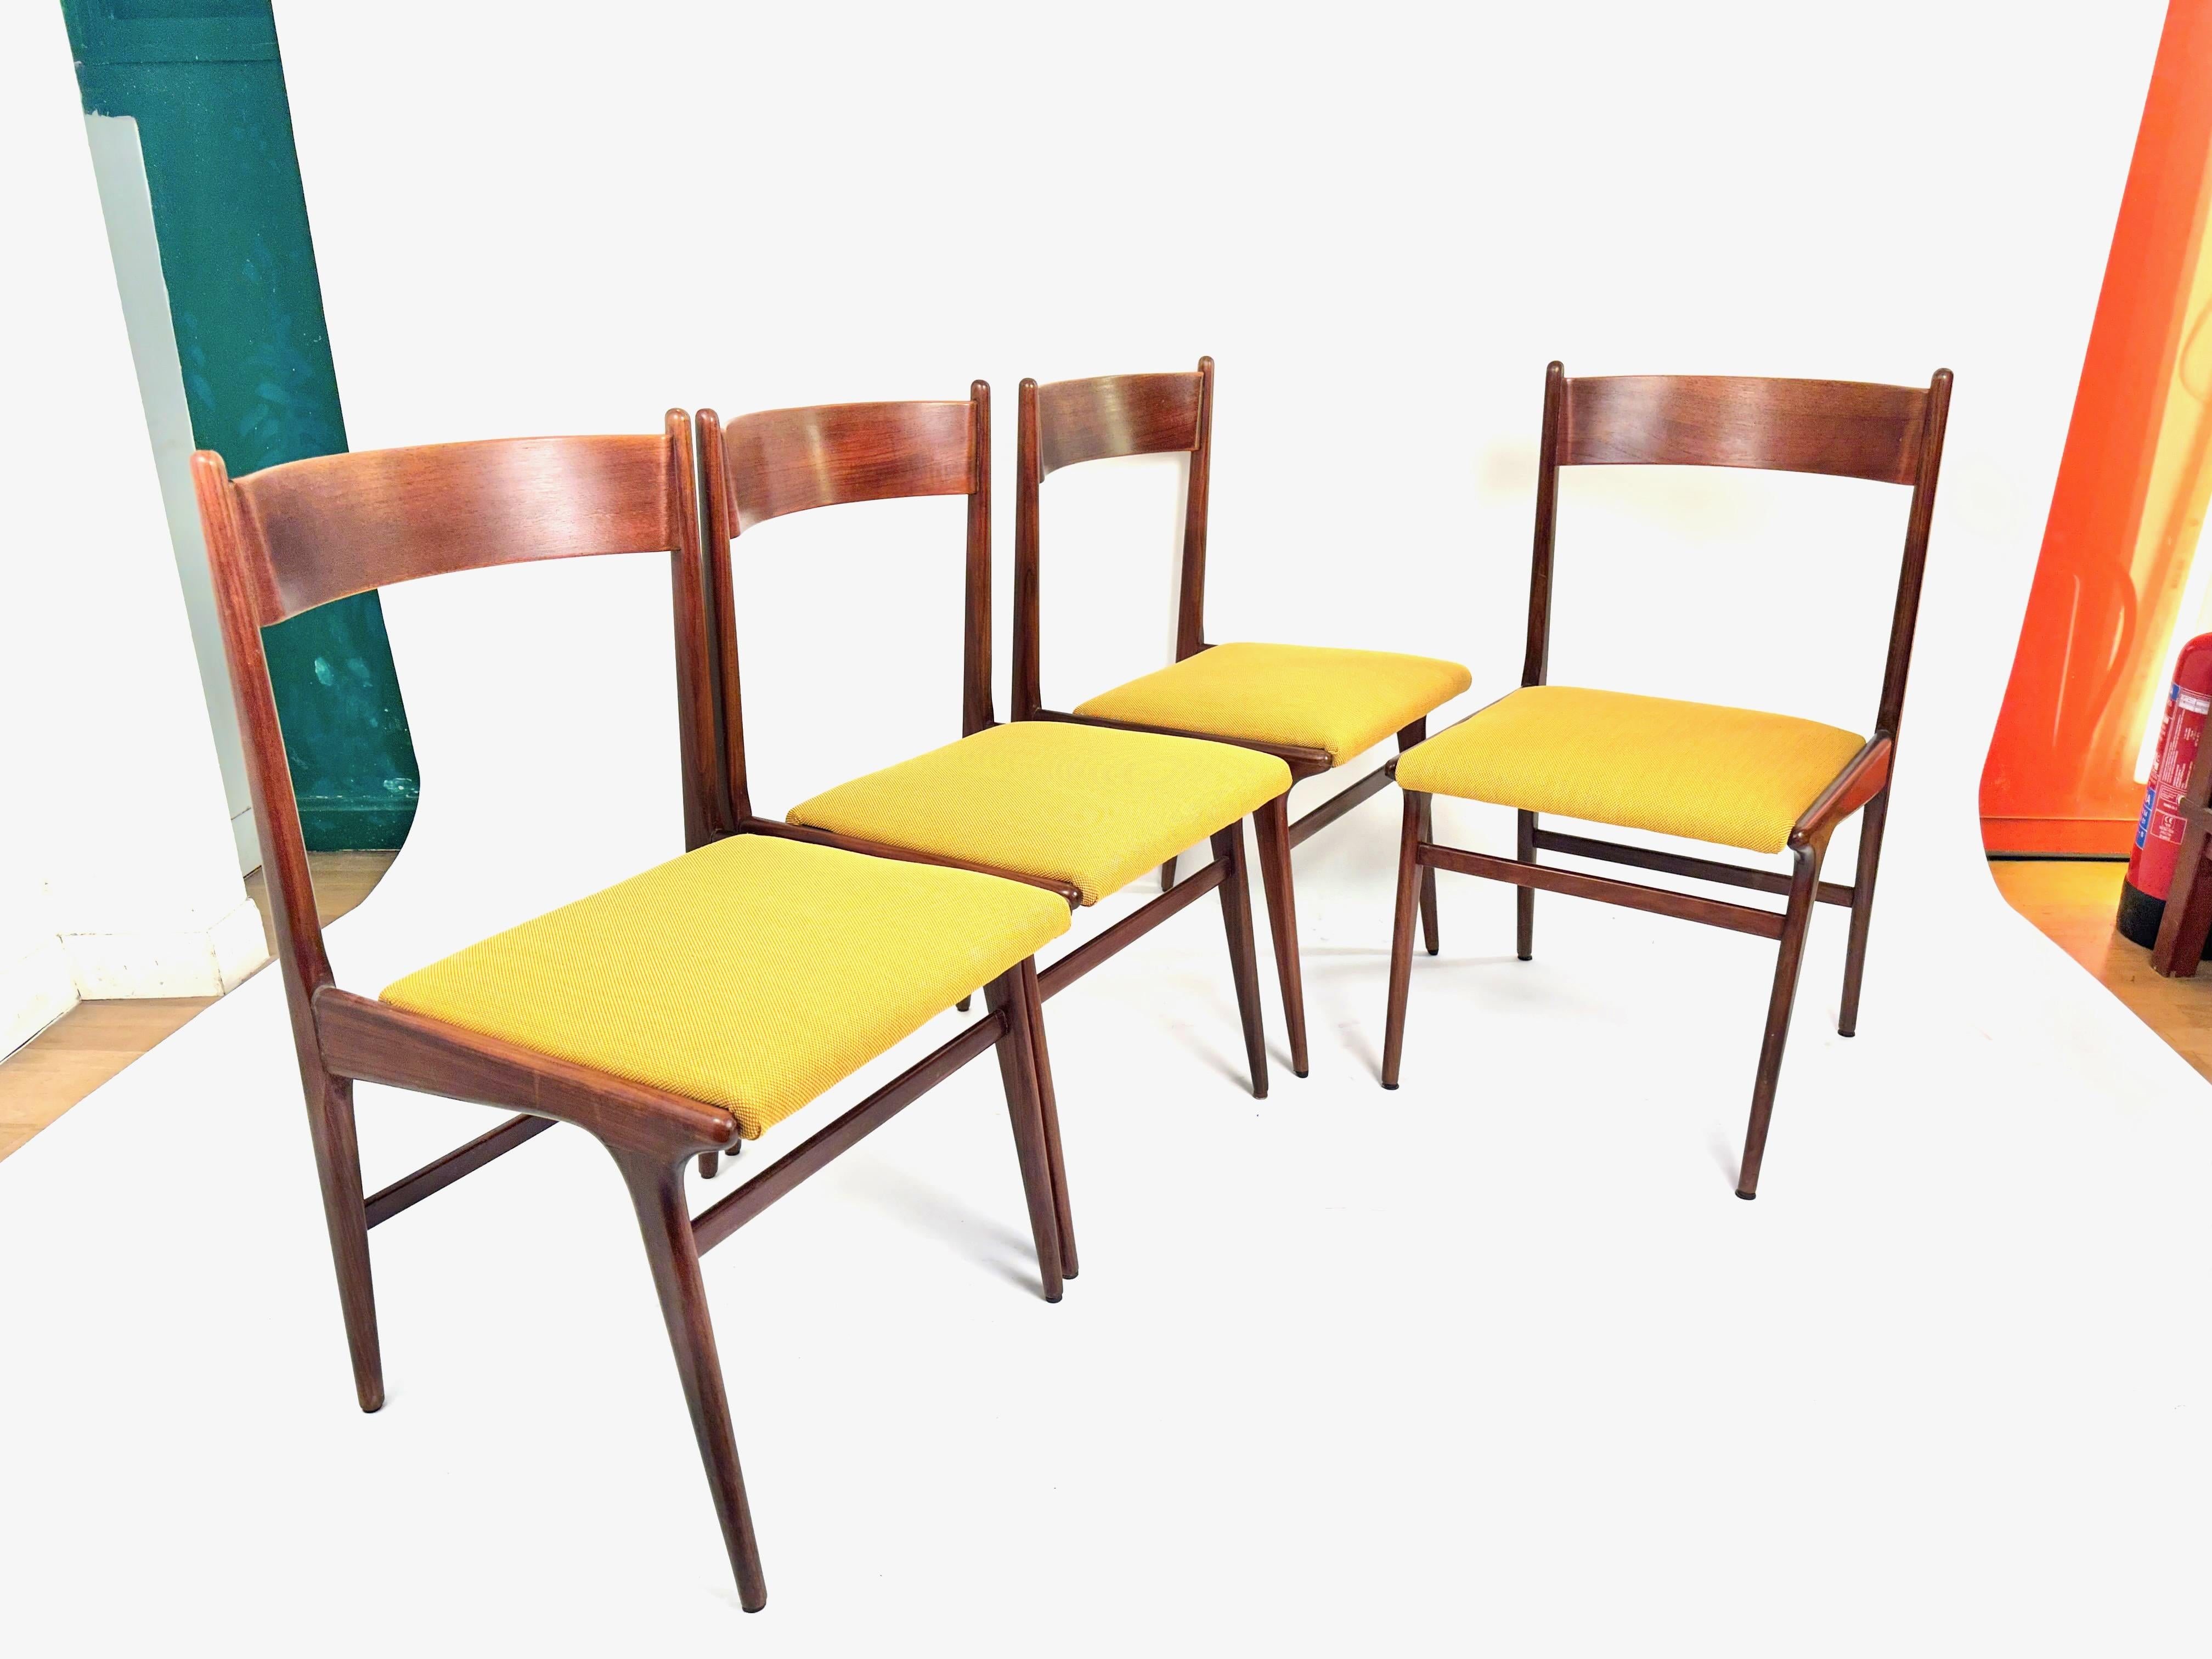 Carlo de Carli MidSet of Four Teak Dining Chairs in Kvadrat Yello Fabric, 1960s For Sale 3